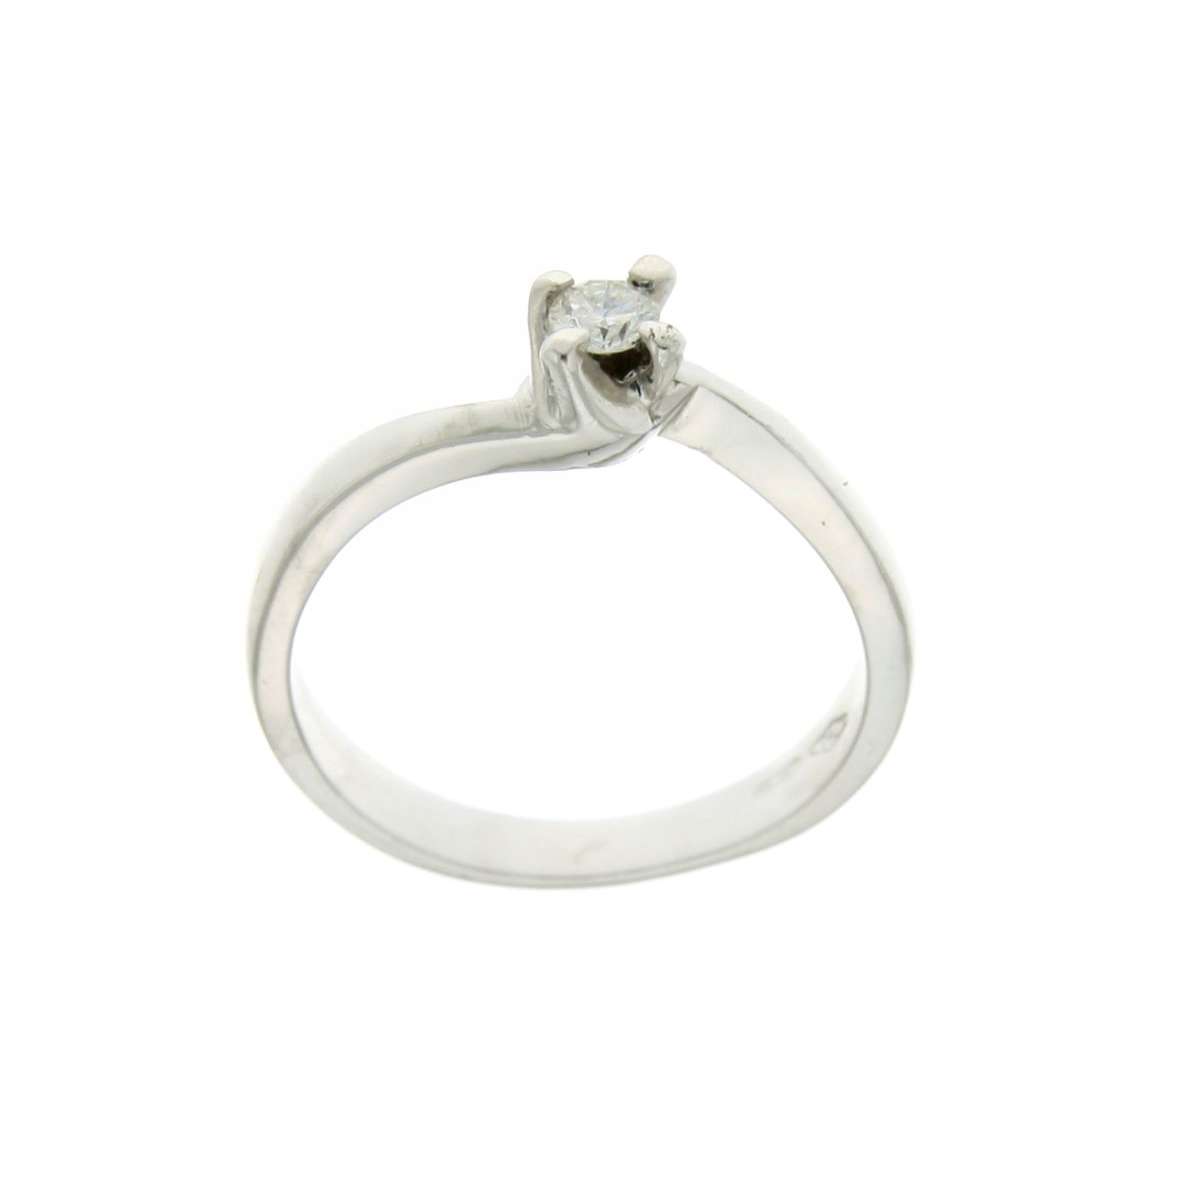 White gold Valentino style Solitaire Ring 0.15 carats diamonds G-VS1